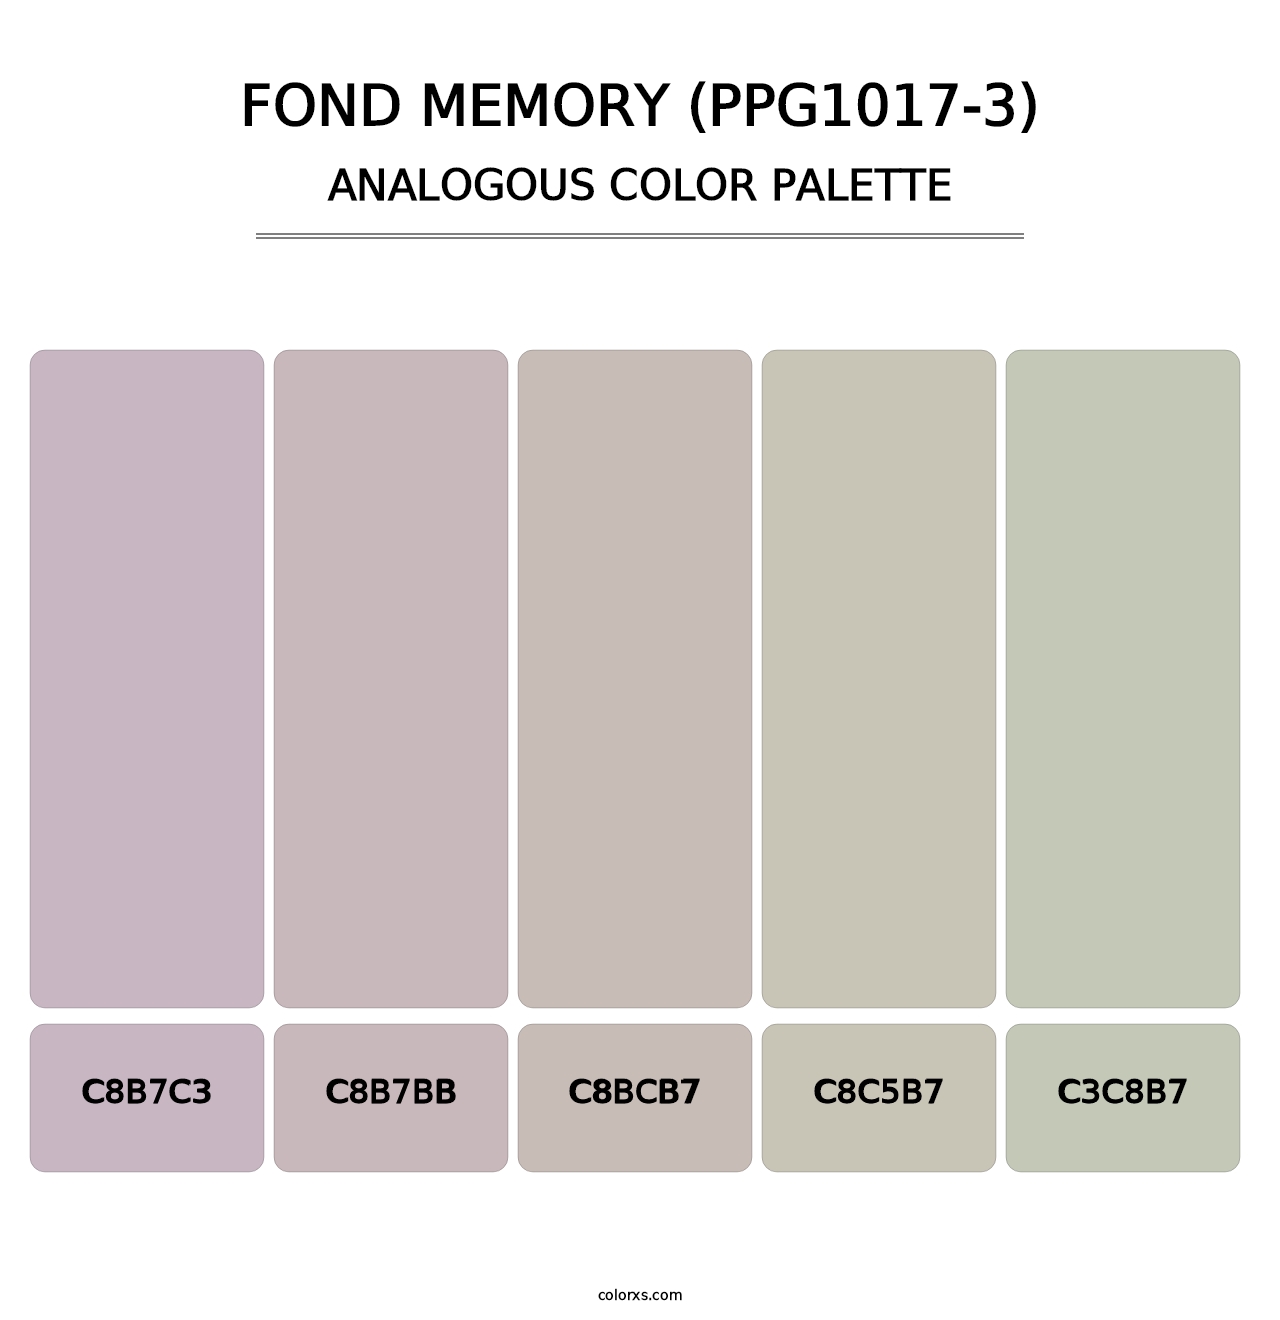 Fond Memory (PPG1017-3) - Analogous Color Palette